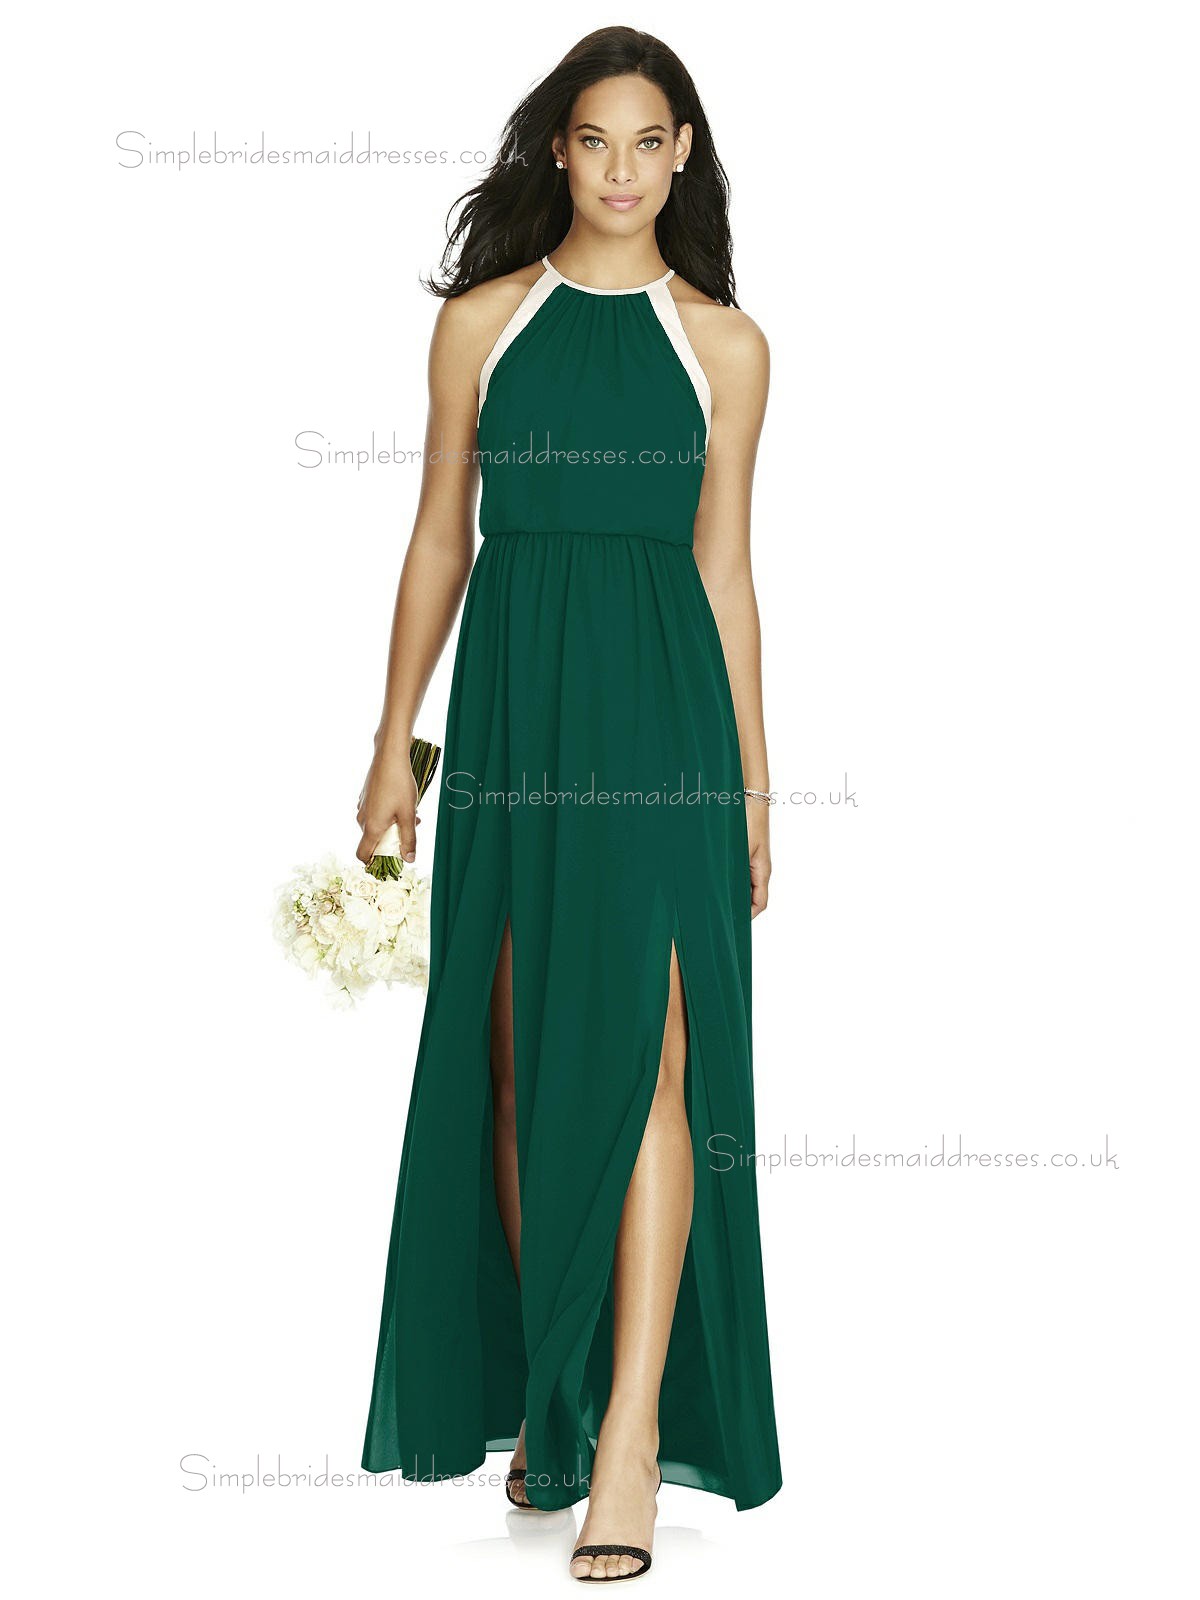 jade green bridesmaid dresses uk